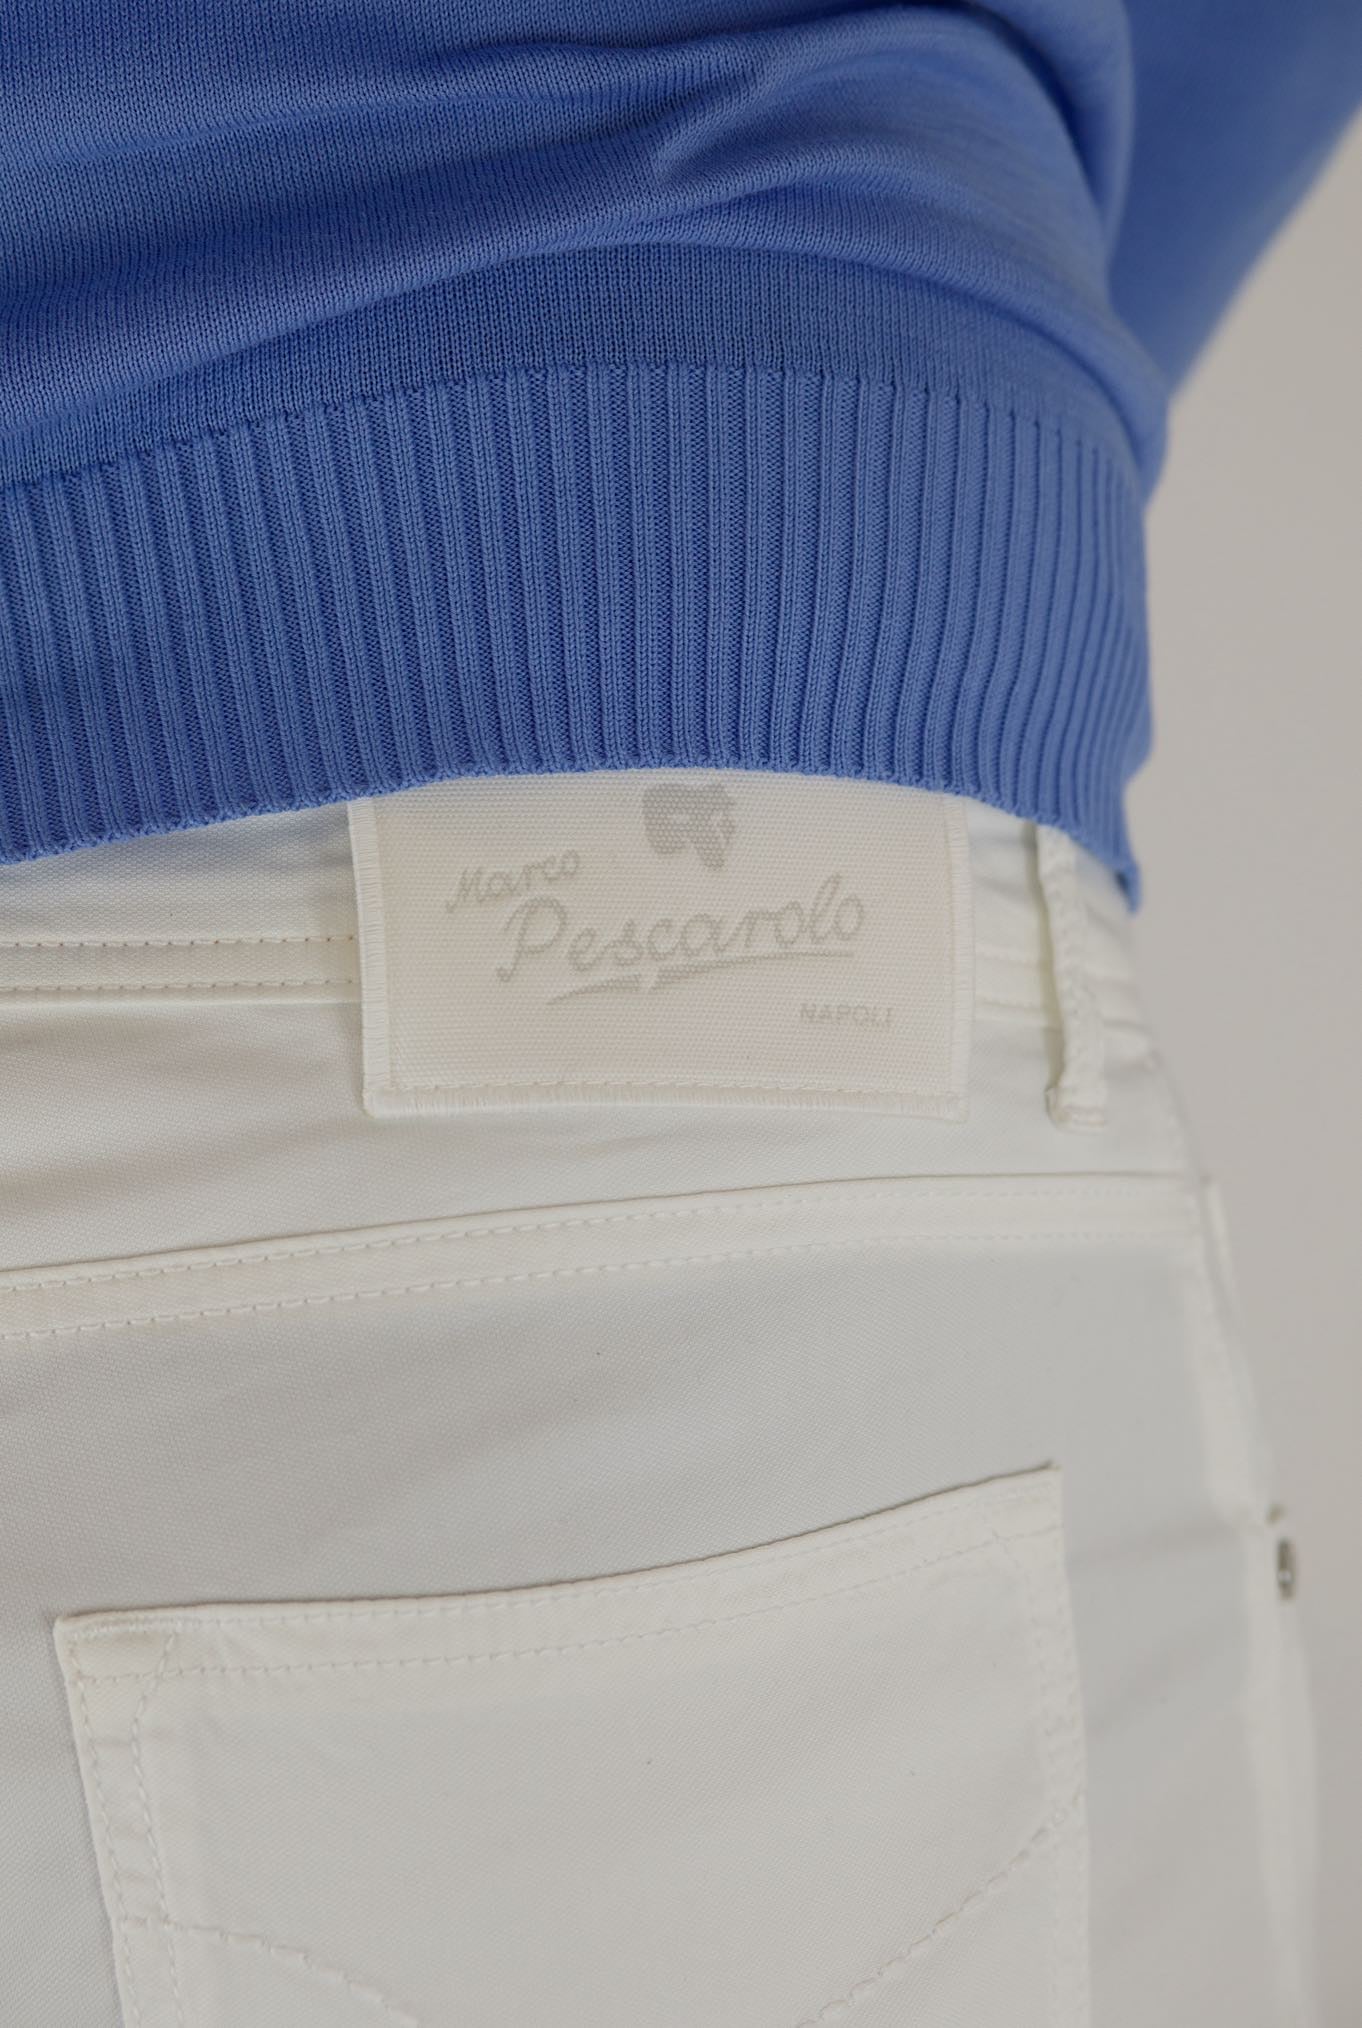 PESCAROLO Pantaloni 5 Tasche mod. Nerano Cotone Seta Bianco